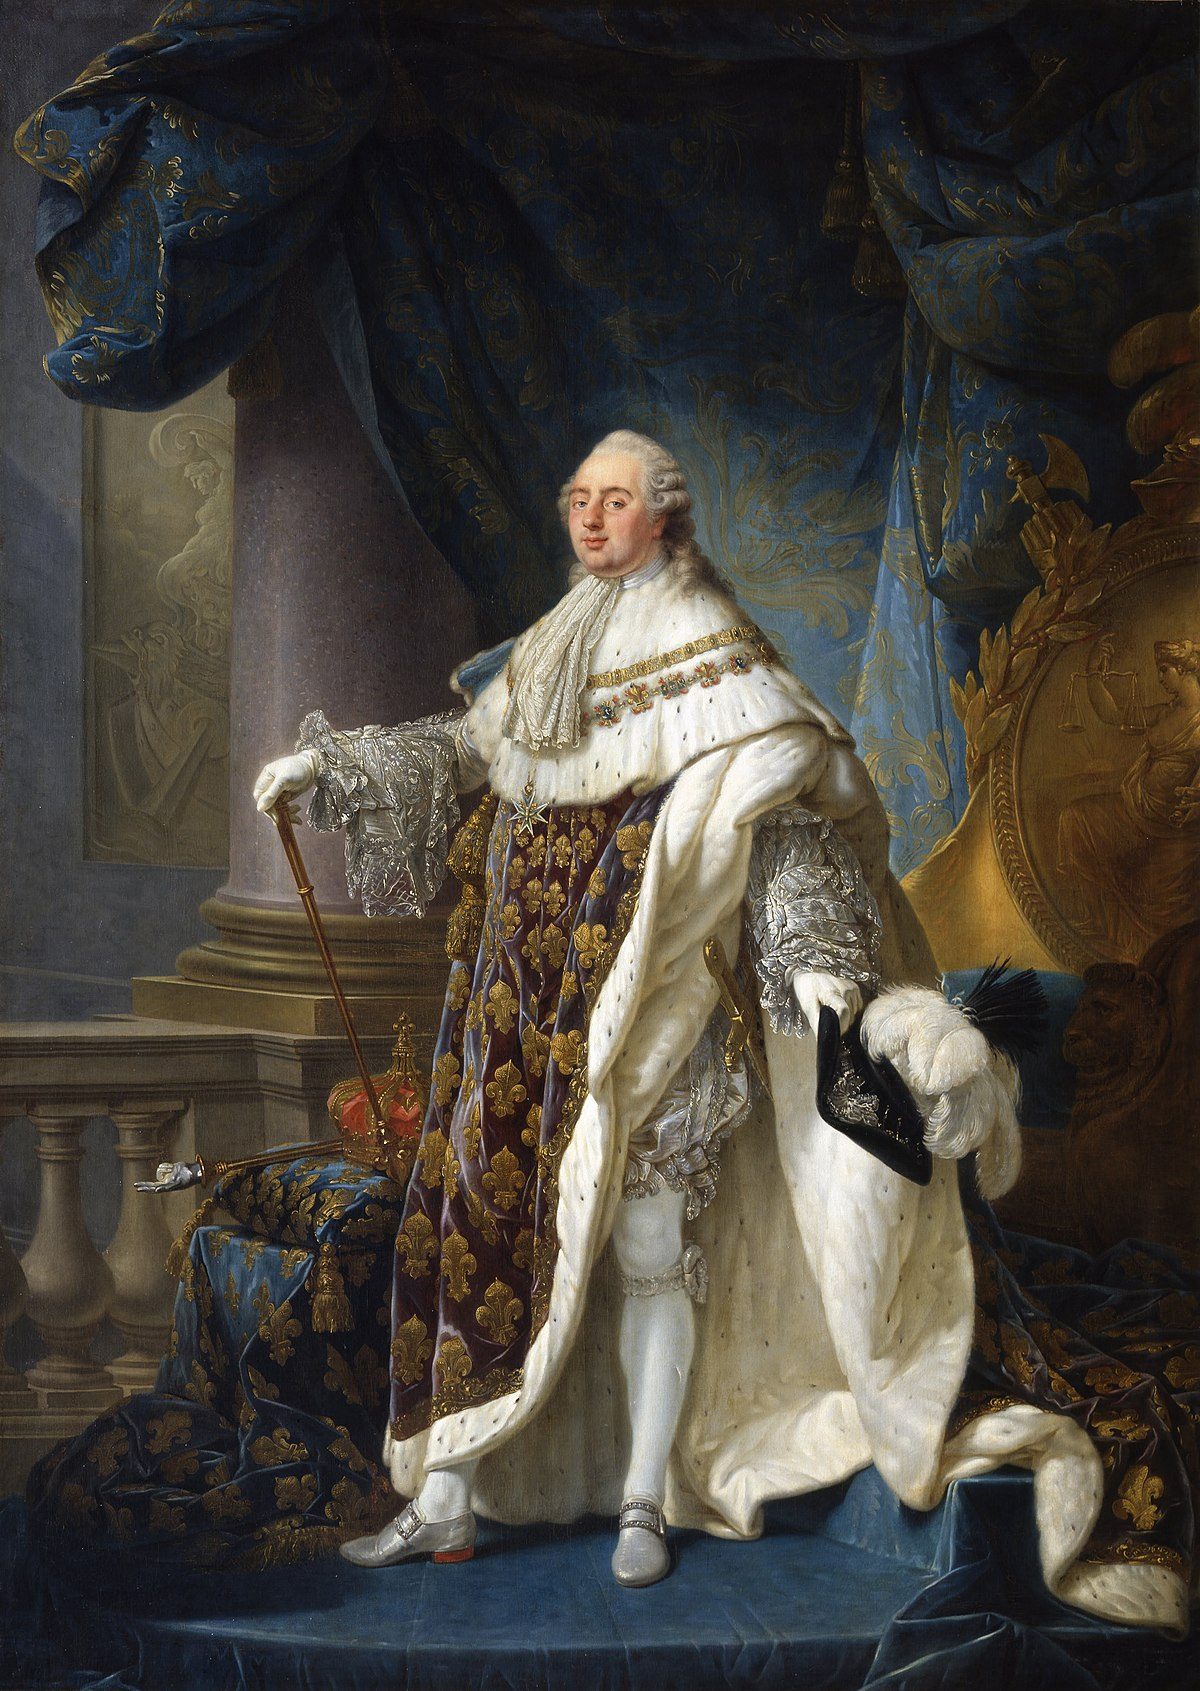 The French King Louis XVI